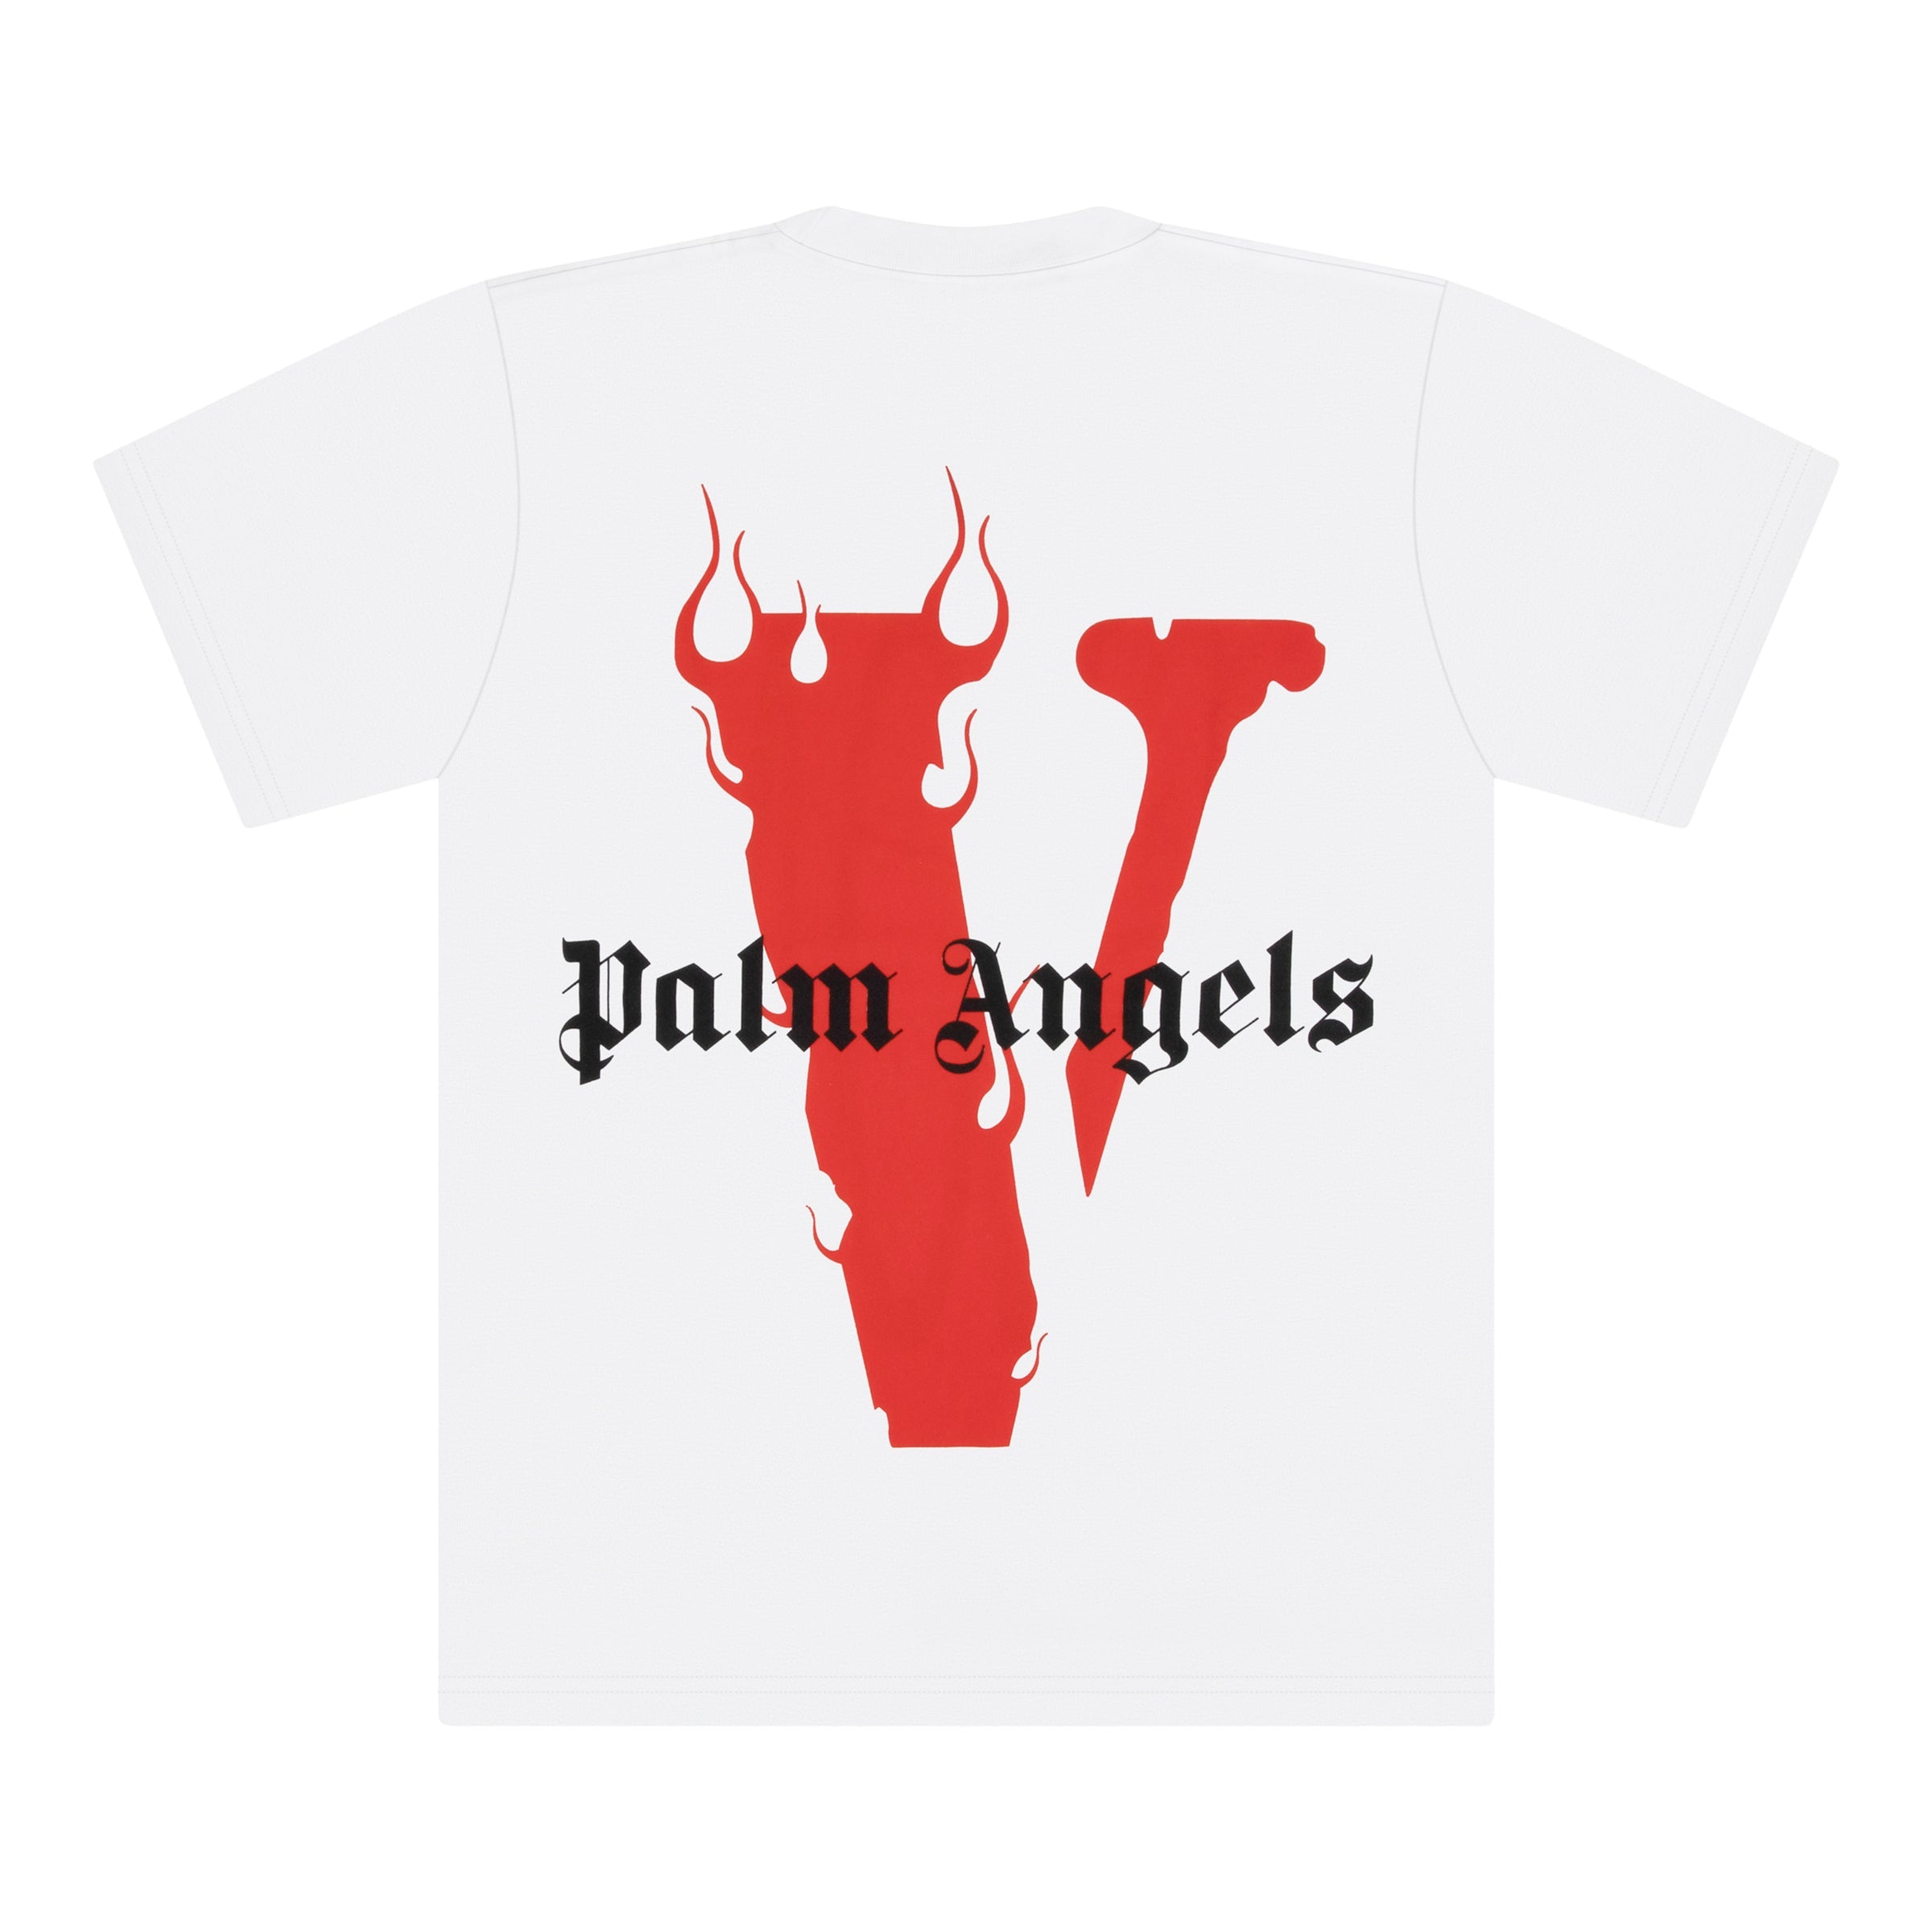 Palm angels x vlone - Shirts